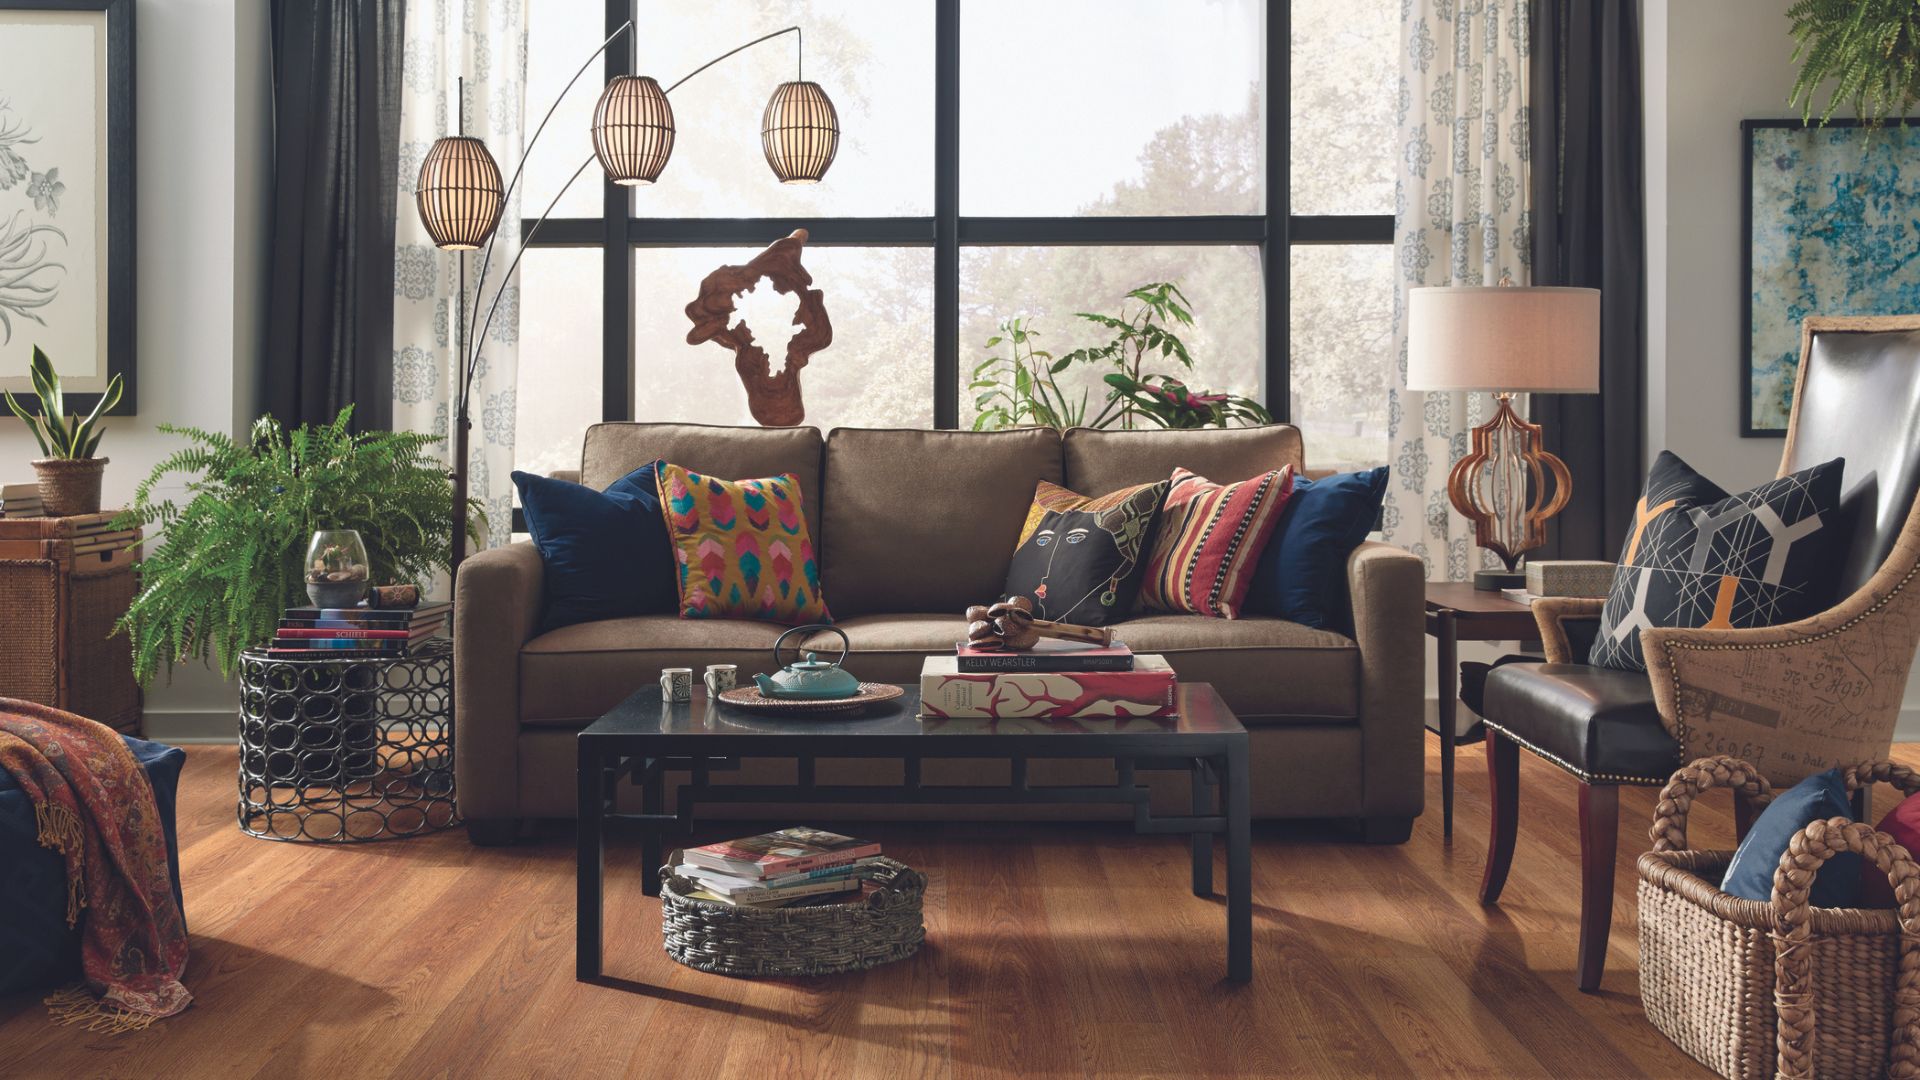 Luxury vinyl flooring in a bohemian style living room